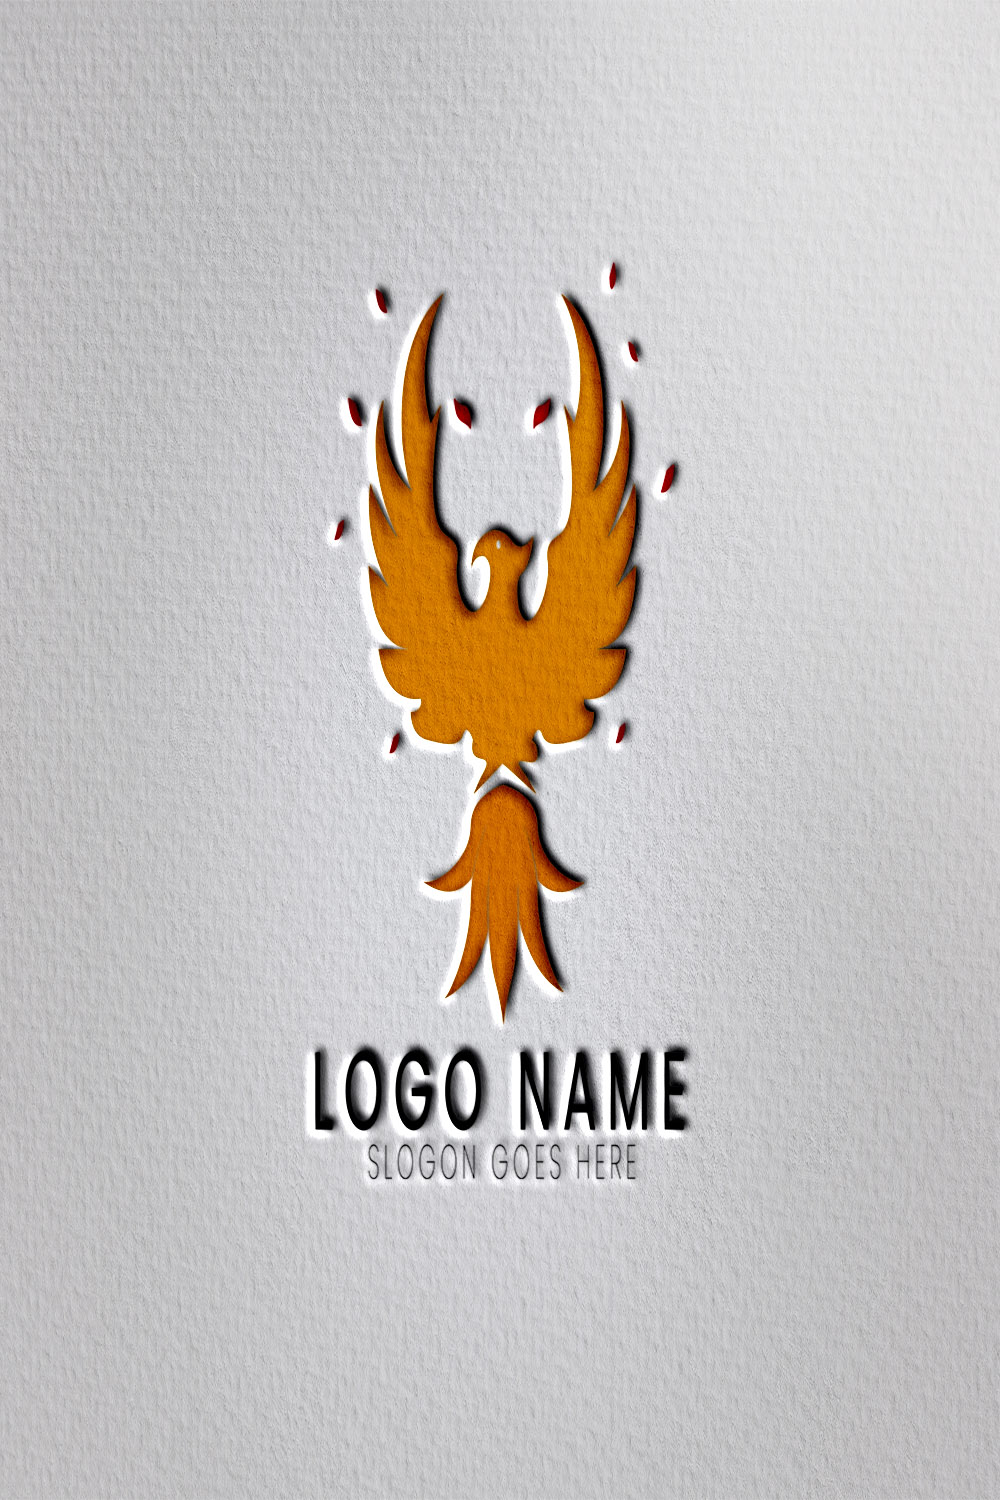 Bird logo, lion logo, Animal logo, letter name logo, Eagle logo, king logo, pinterest preview image.